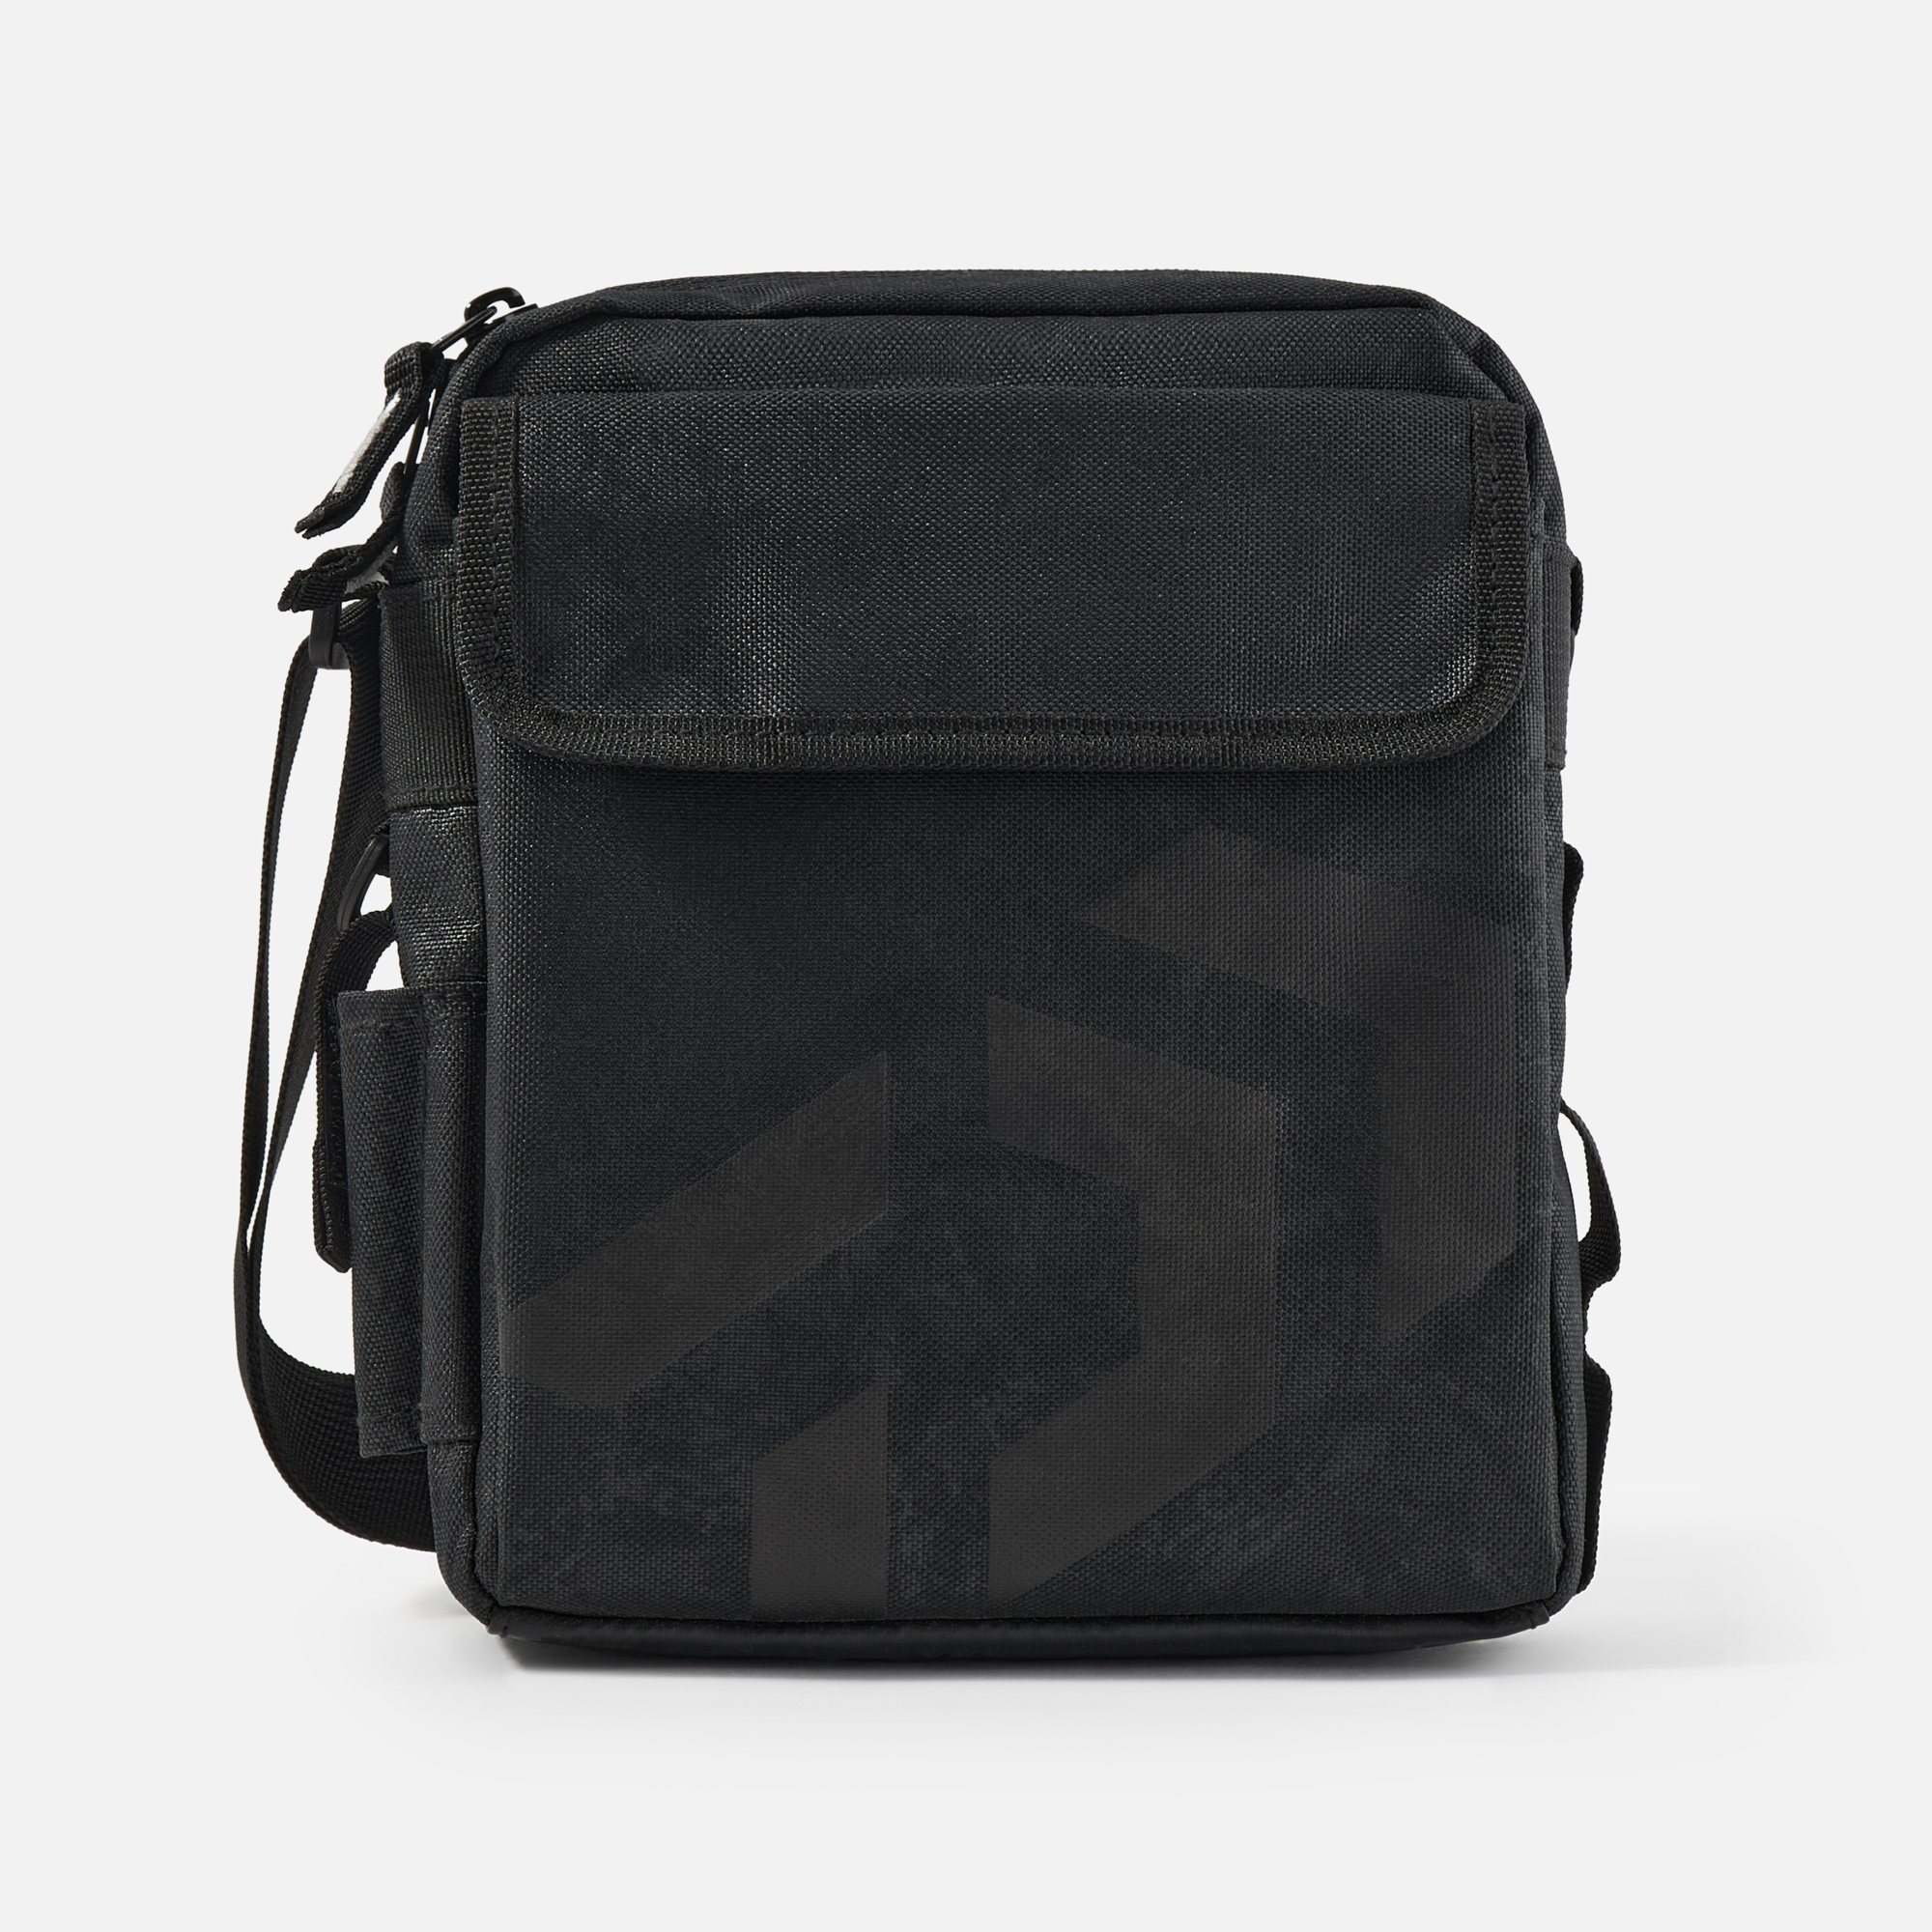 Рюкзак рыболовный Daiwa March Road Sub small Shoulder Backpack чёрный